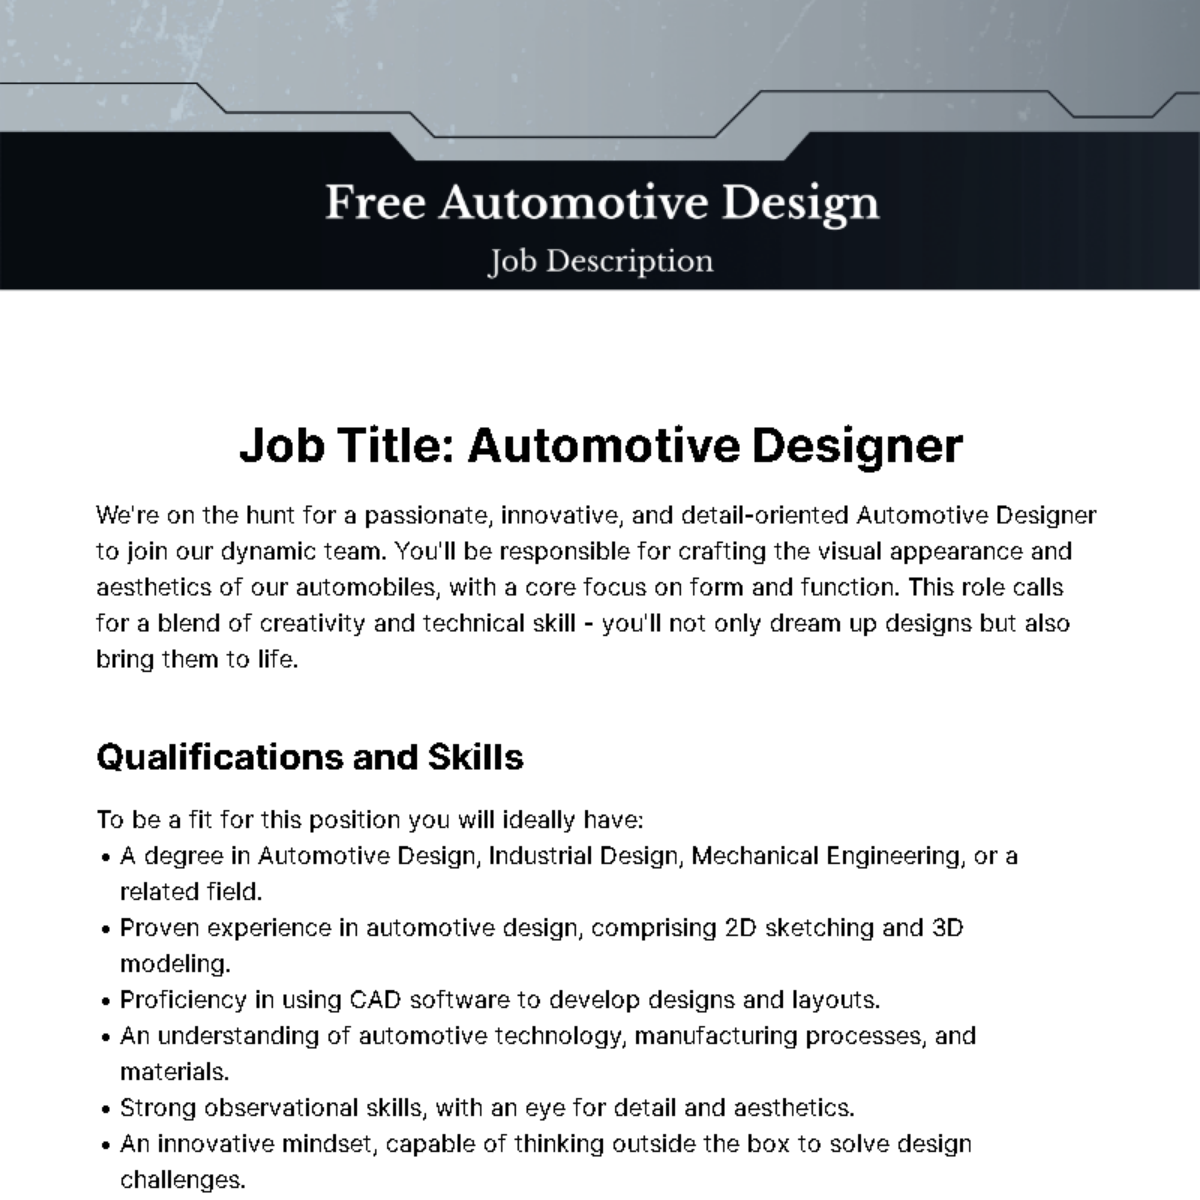 Automotive Design Job Description Template